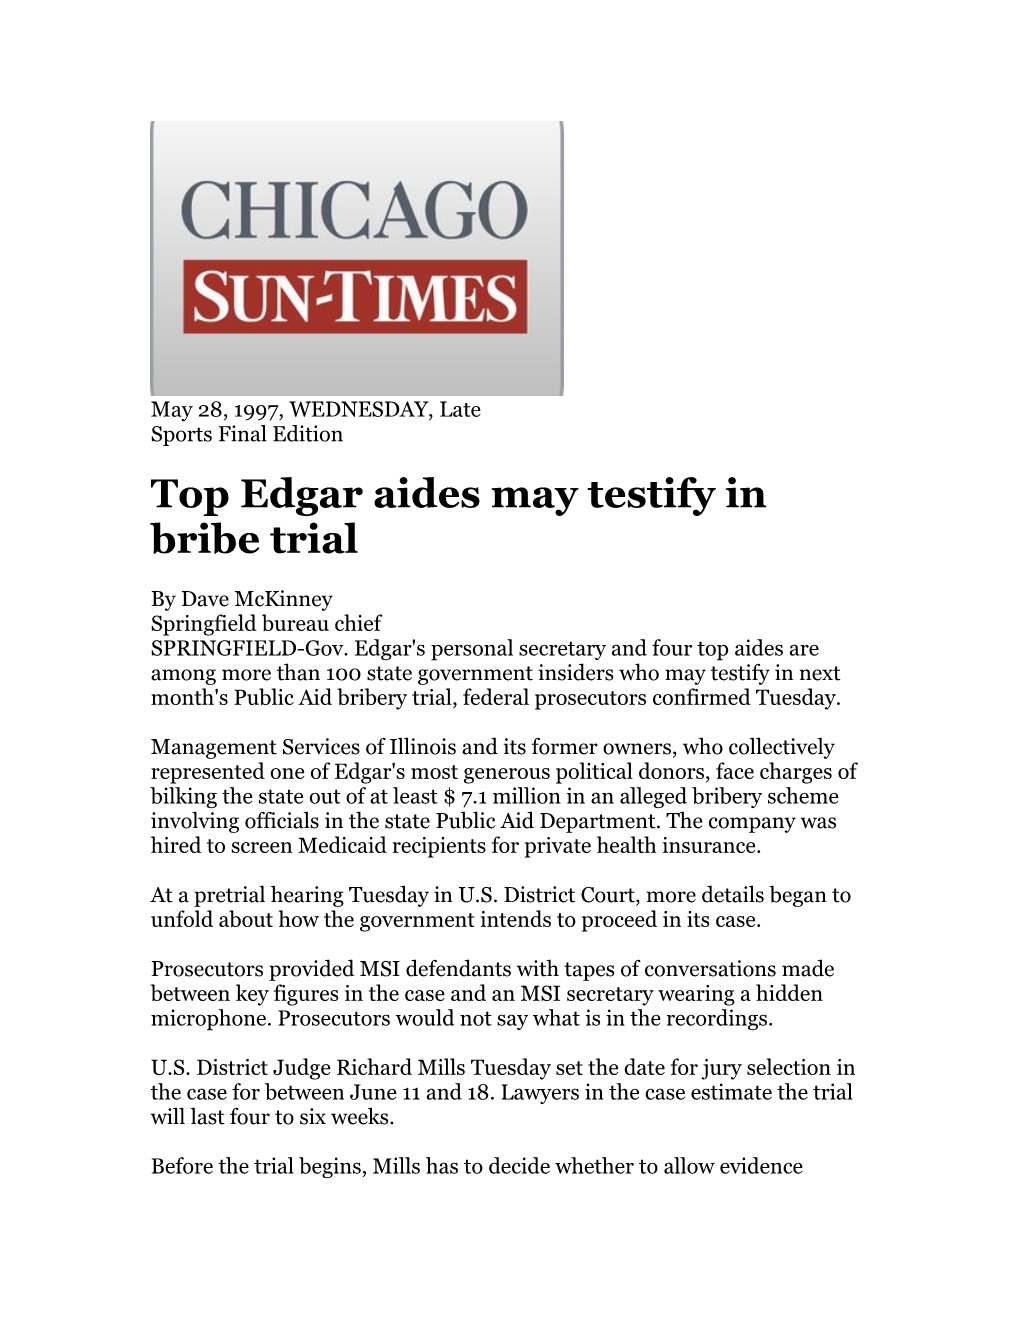 Top Edgar Aides May Testify in Bribe Trial